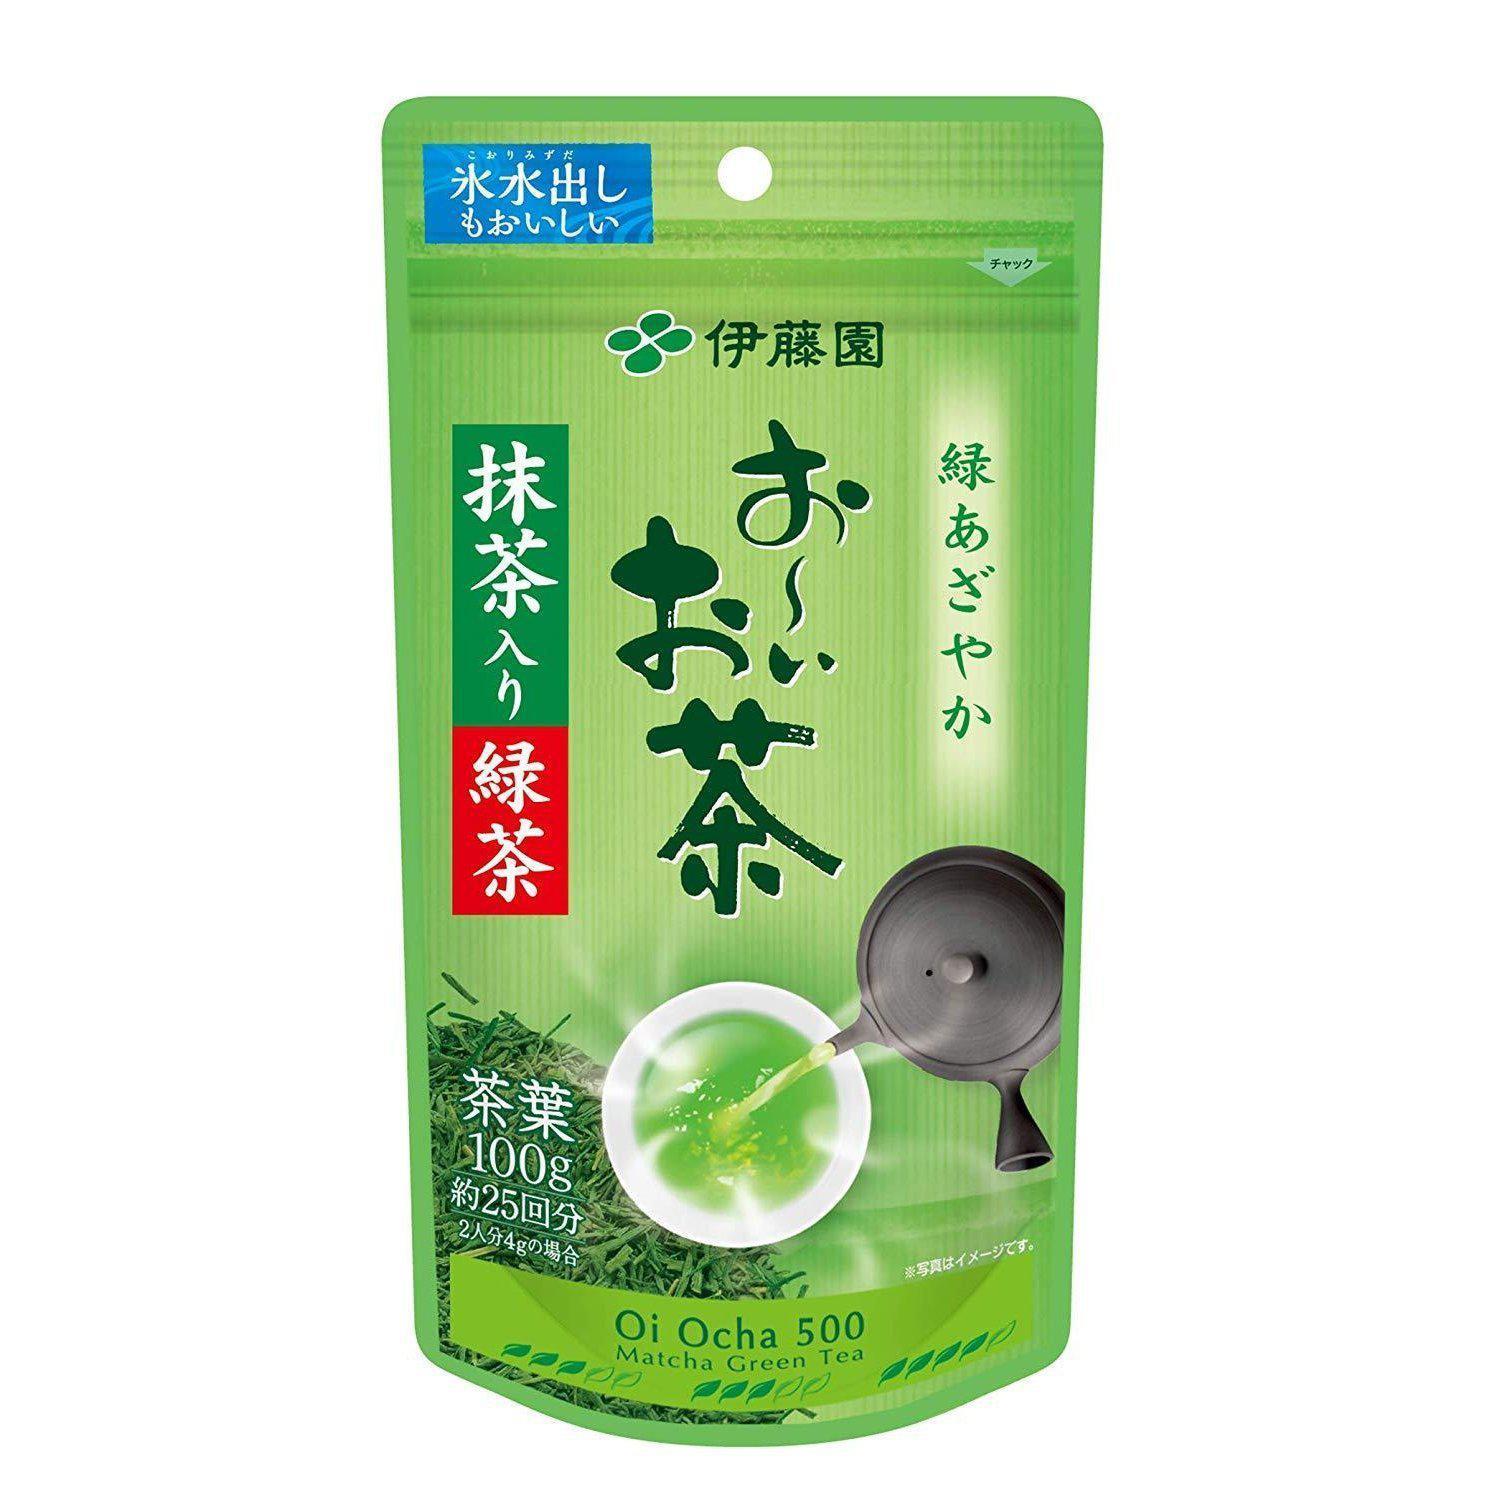 Itoen Oi Ocha Japanese Green Tea Sencha Matcha Blend 100g, Japanese Taste